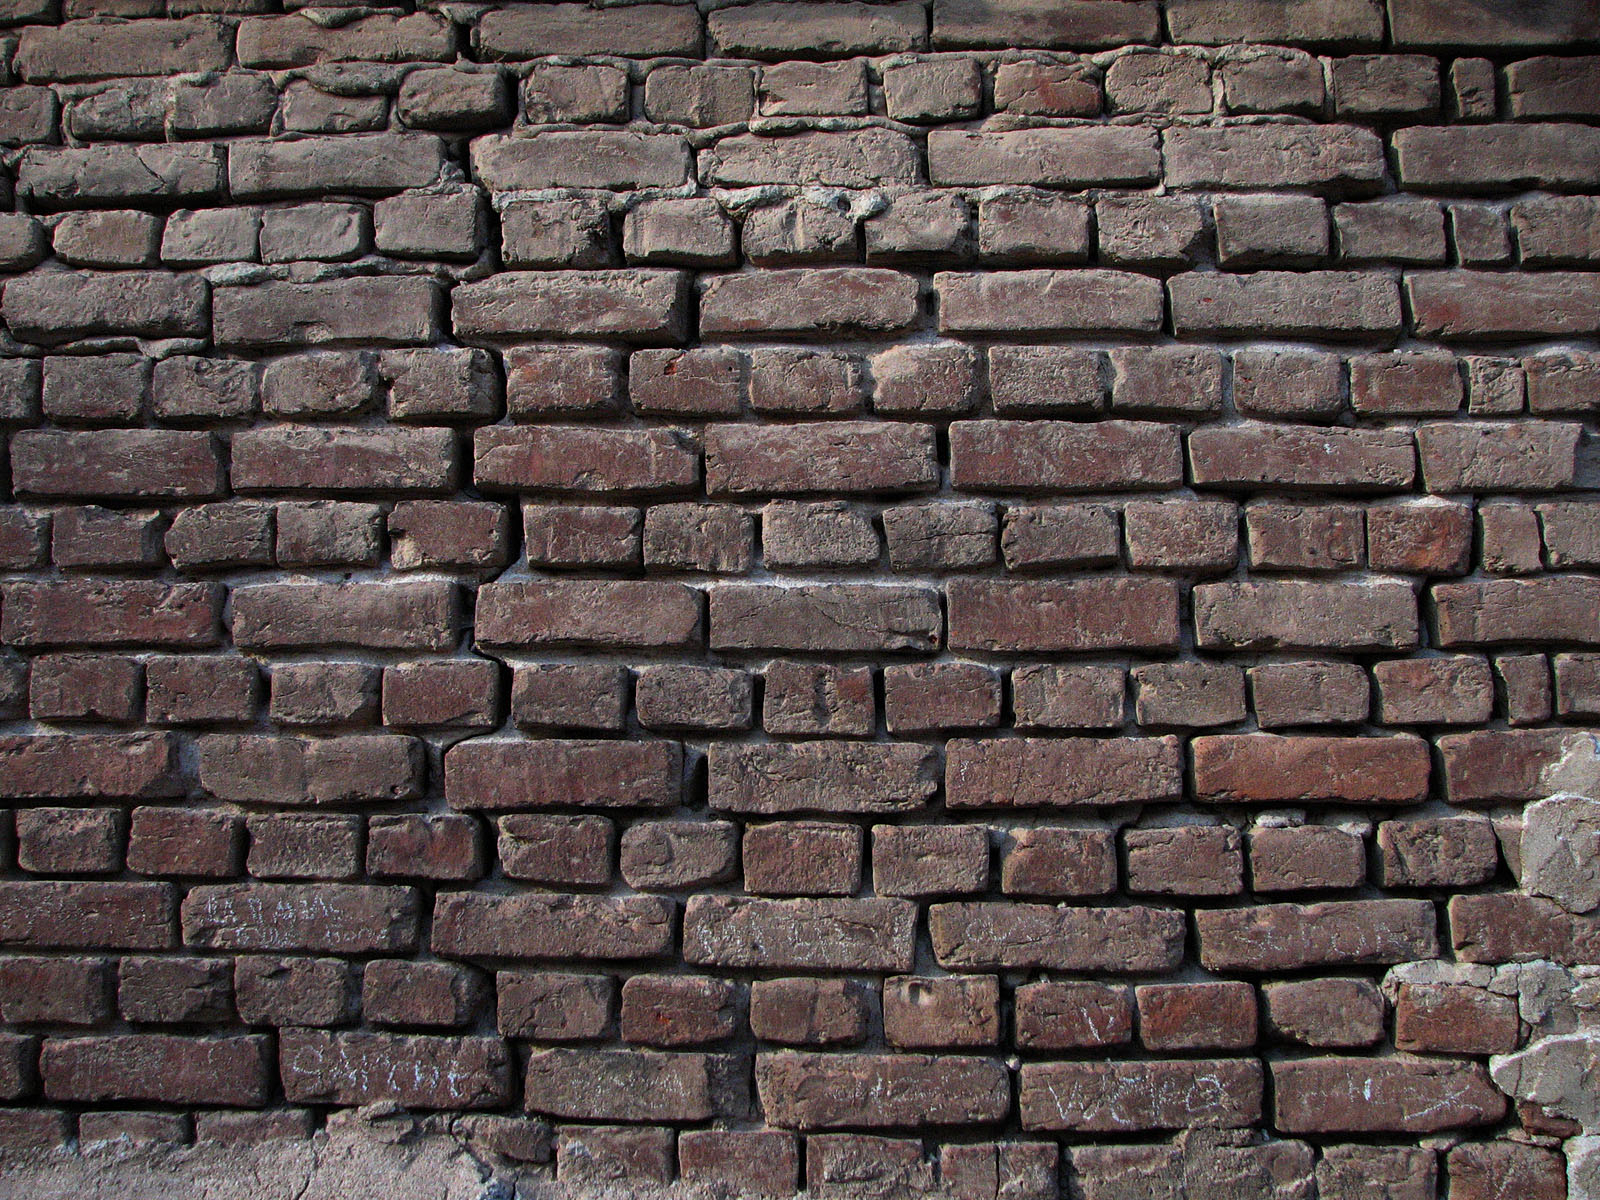 Dark Bricks by Mish-A-Man